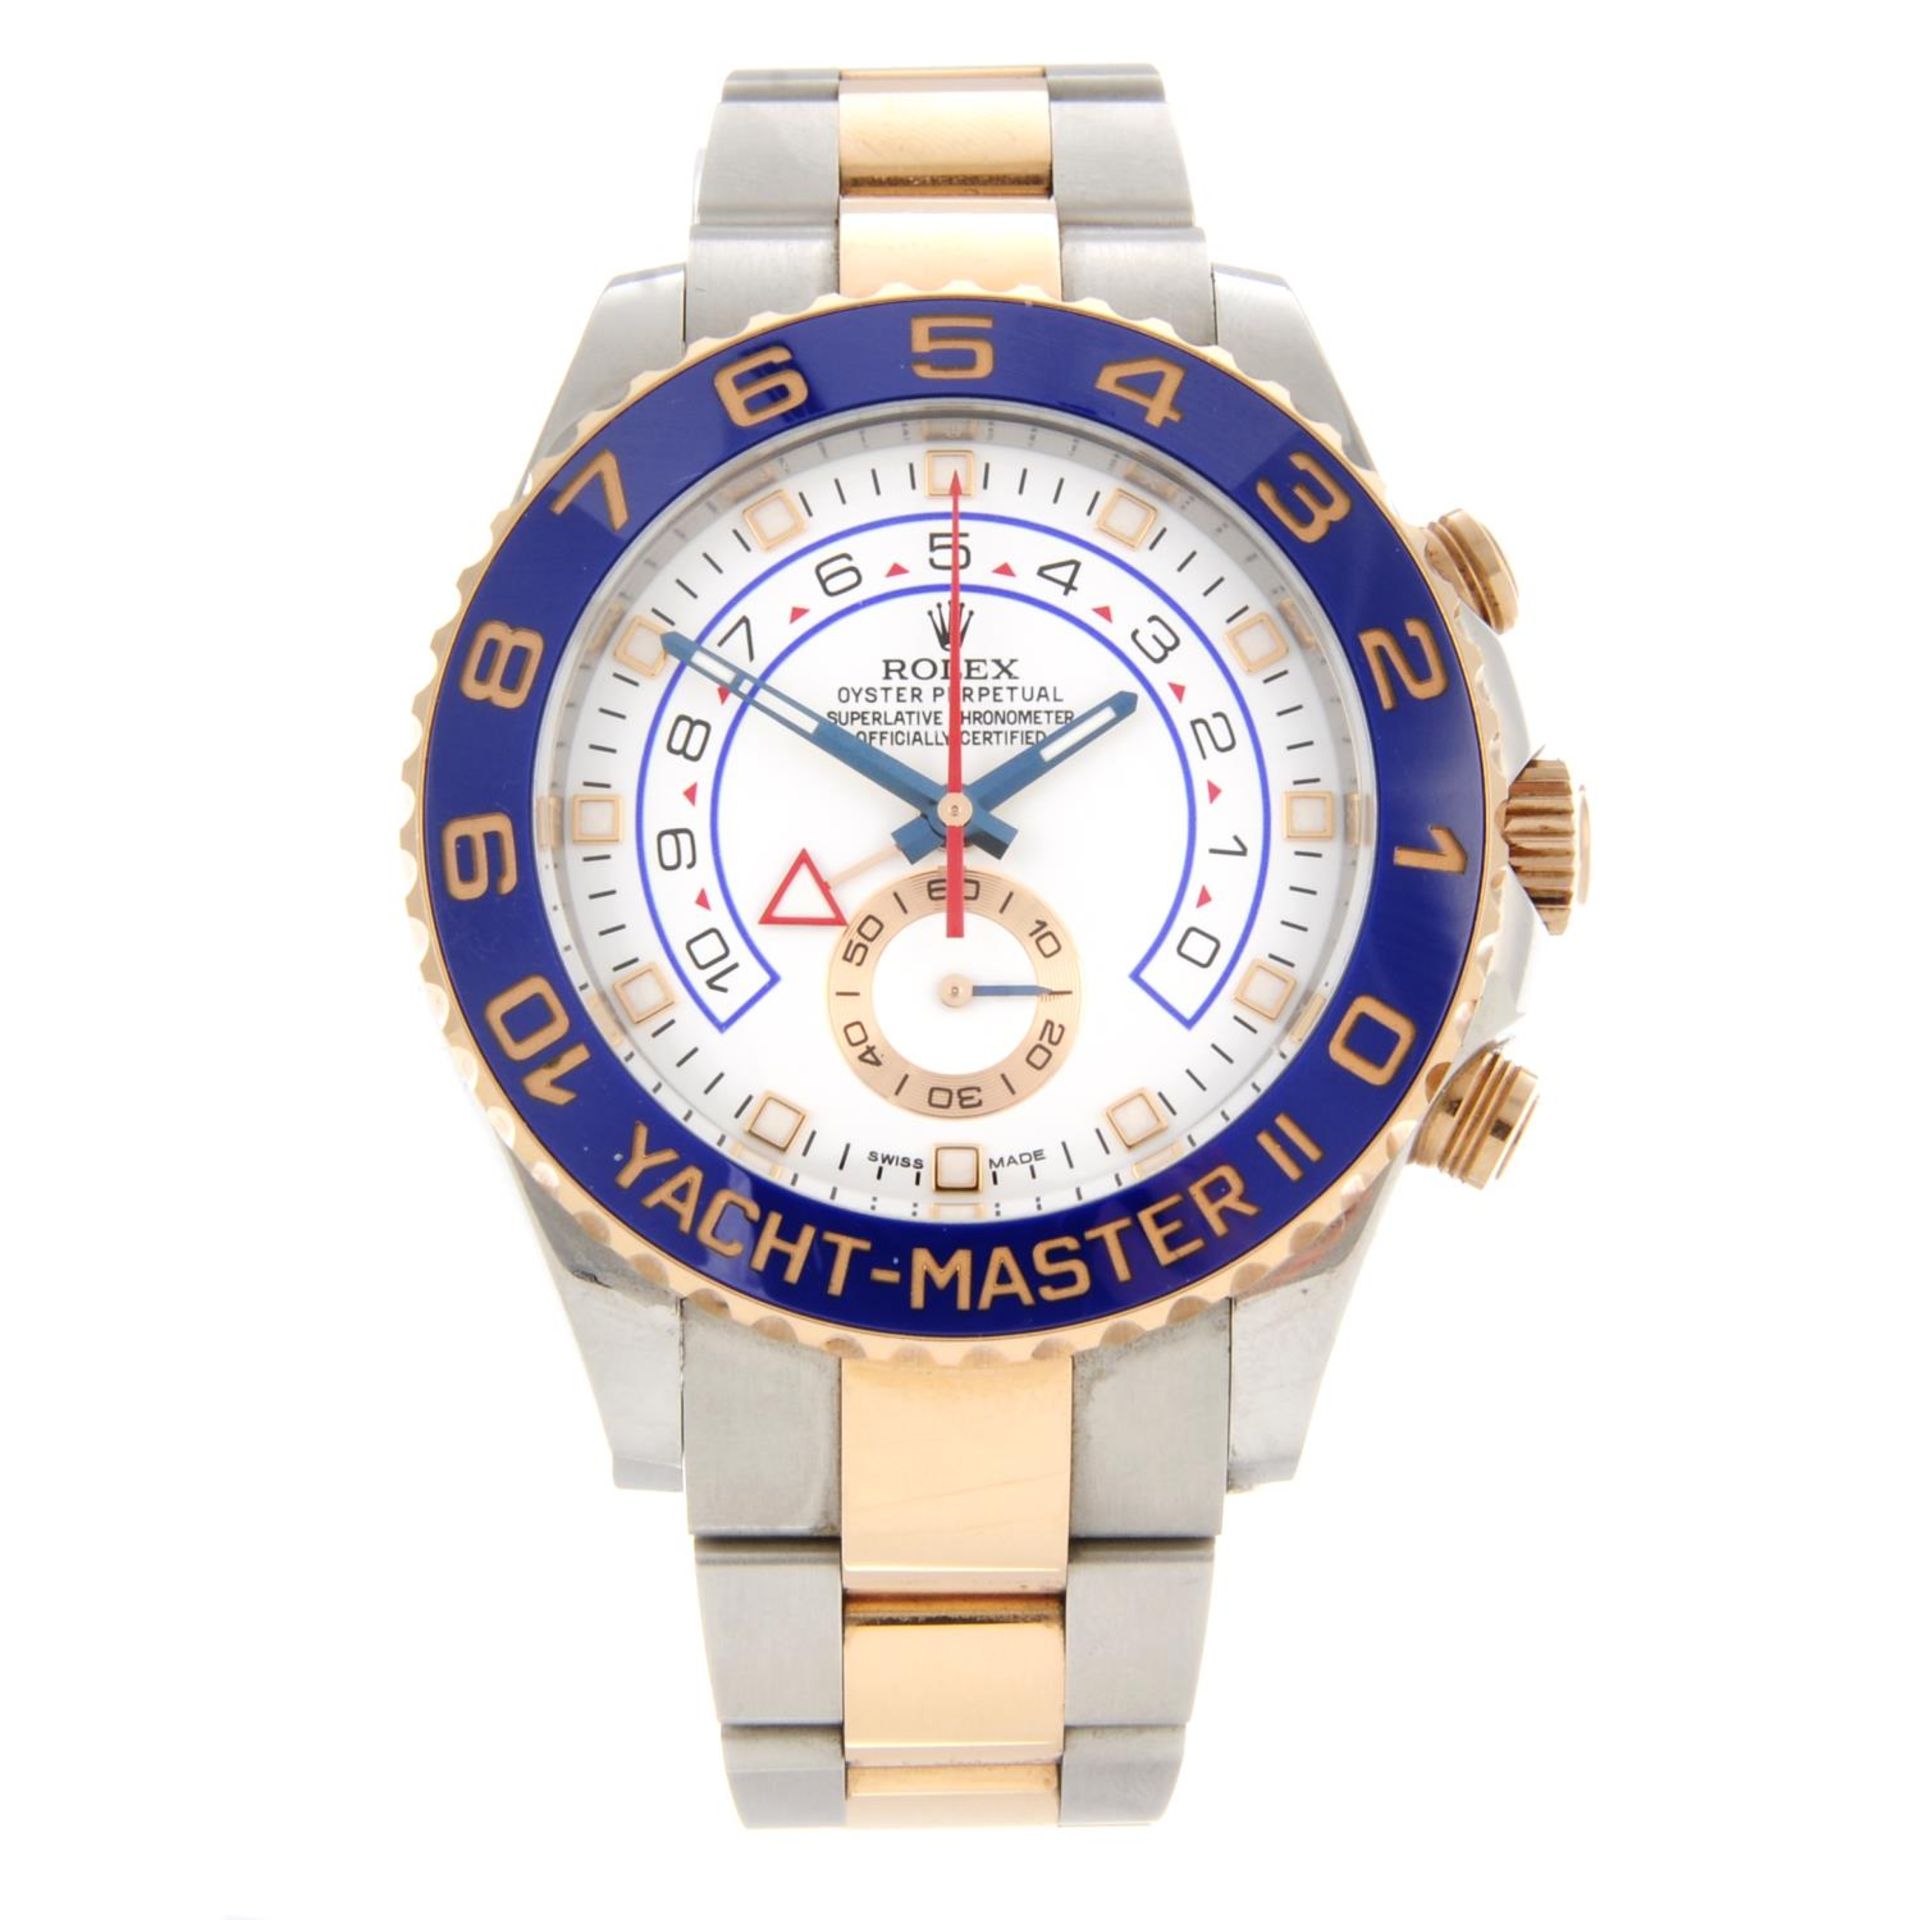 ROLEX - a gentleman's Oyster Perpetual Yacht-Master II bracelet watch.